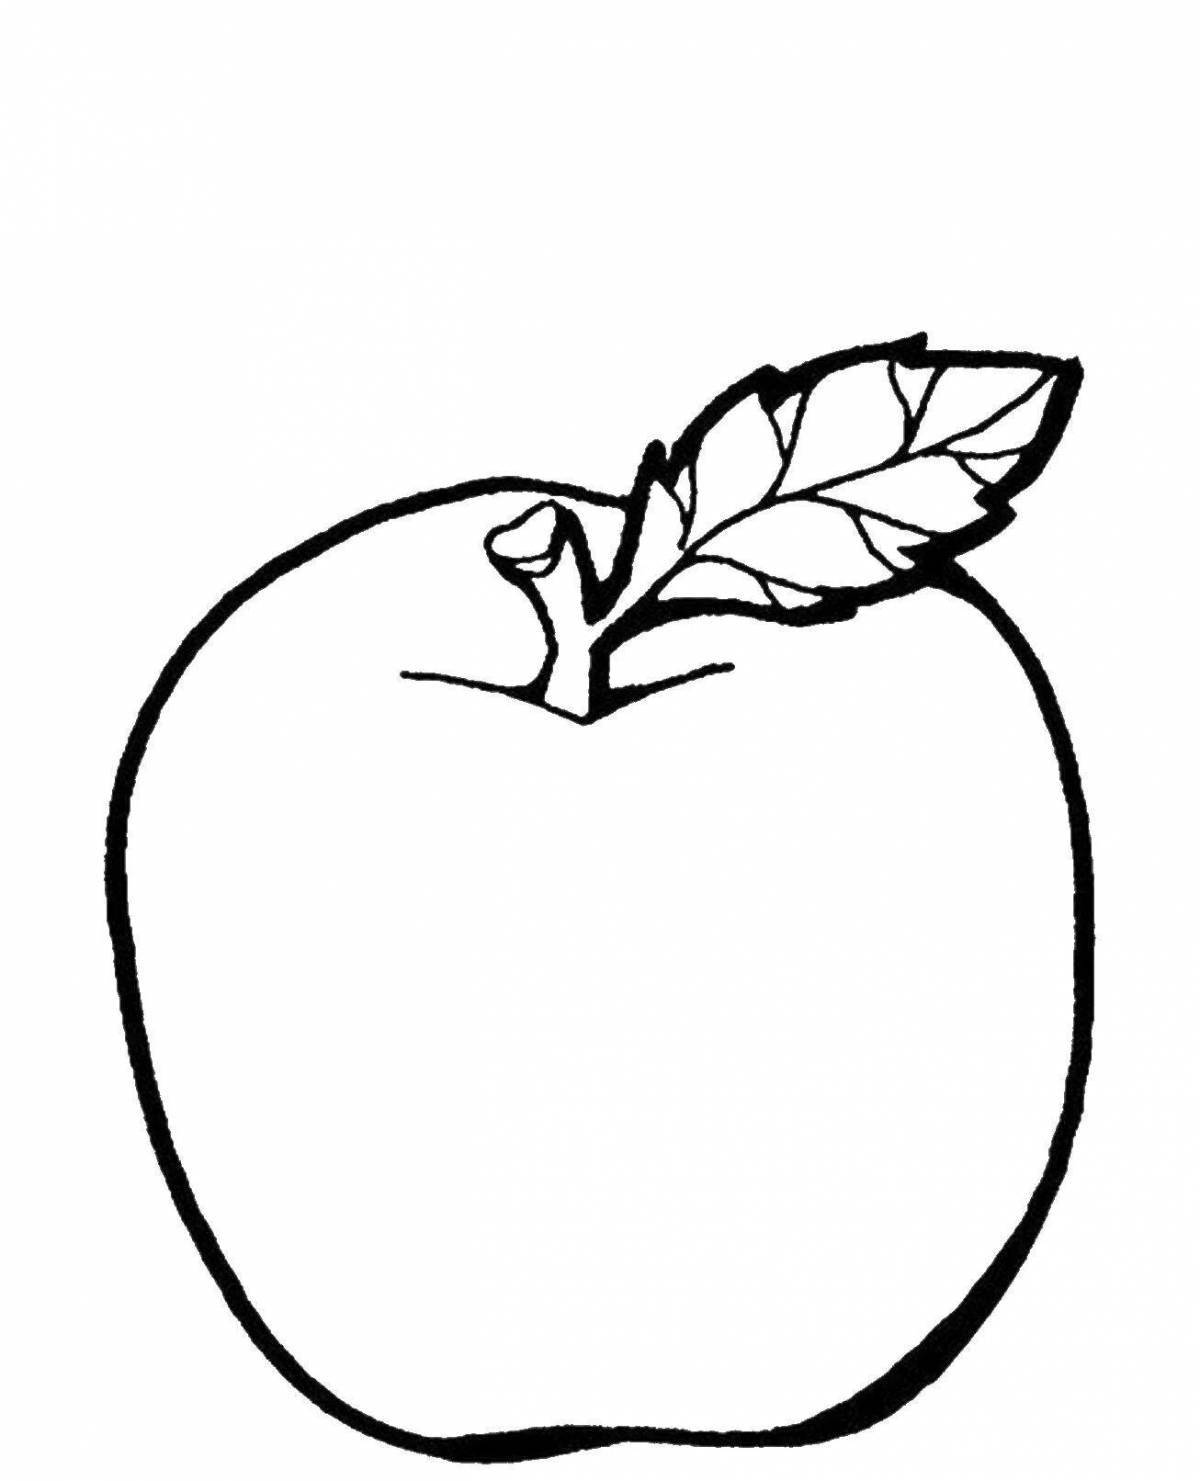 Увлекательная раскраска apple